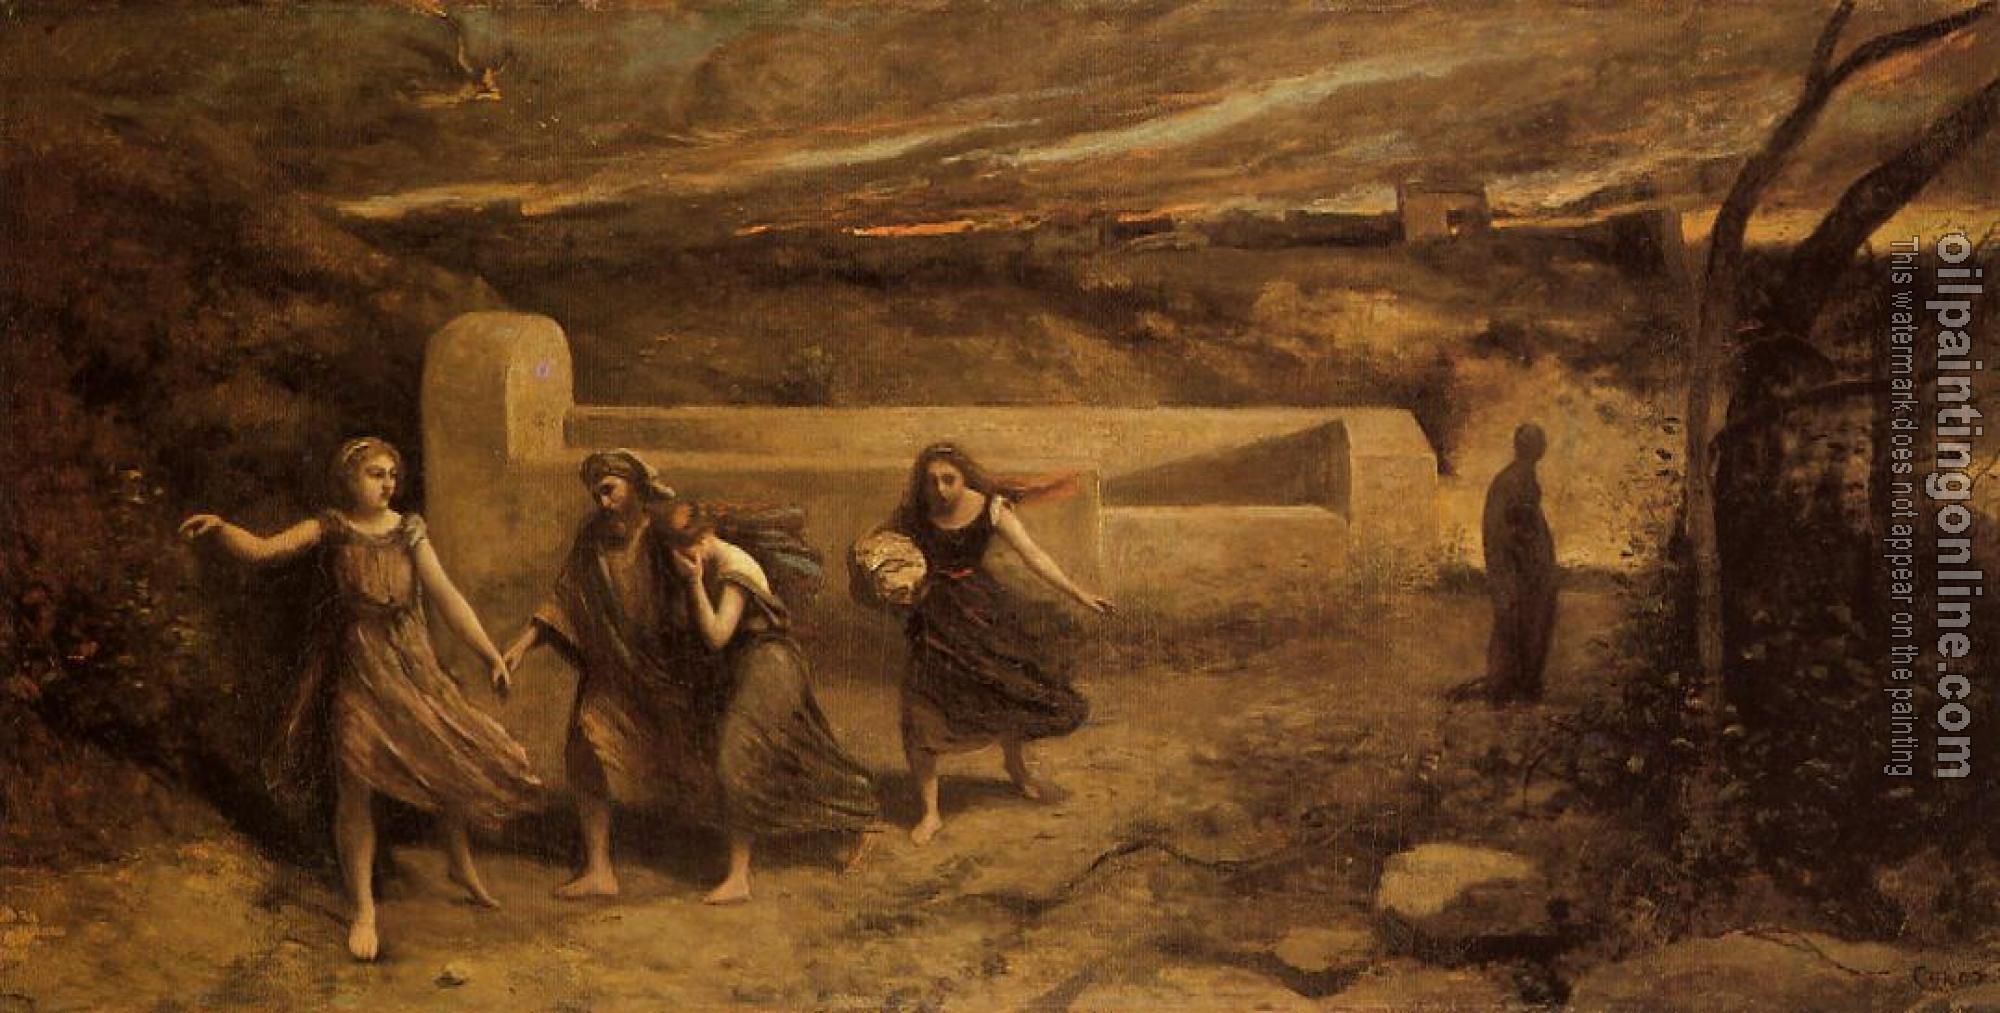 Corot, Jean-Baptiste-Camille - The Destruction of Sodom